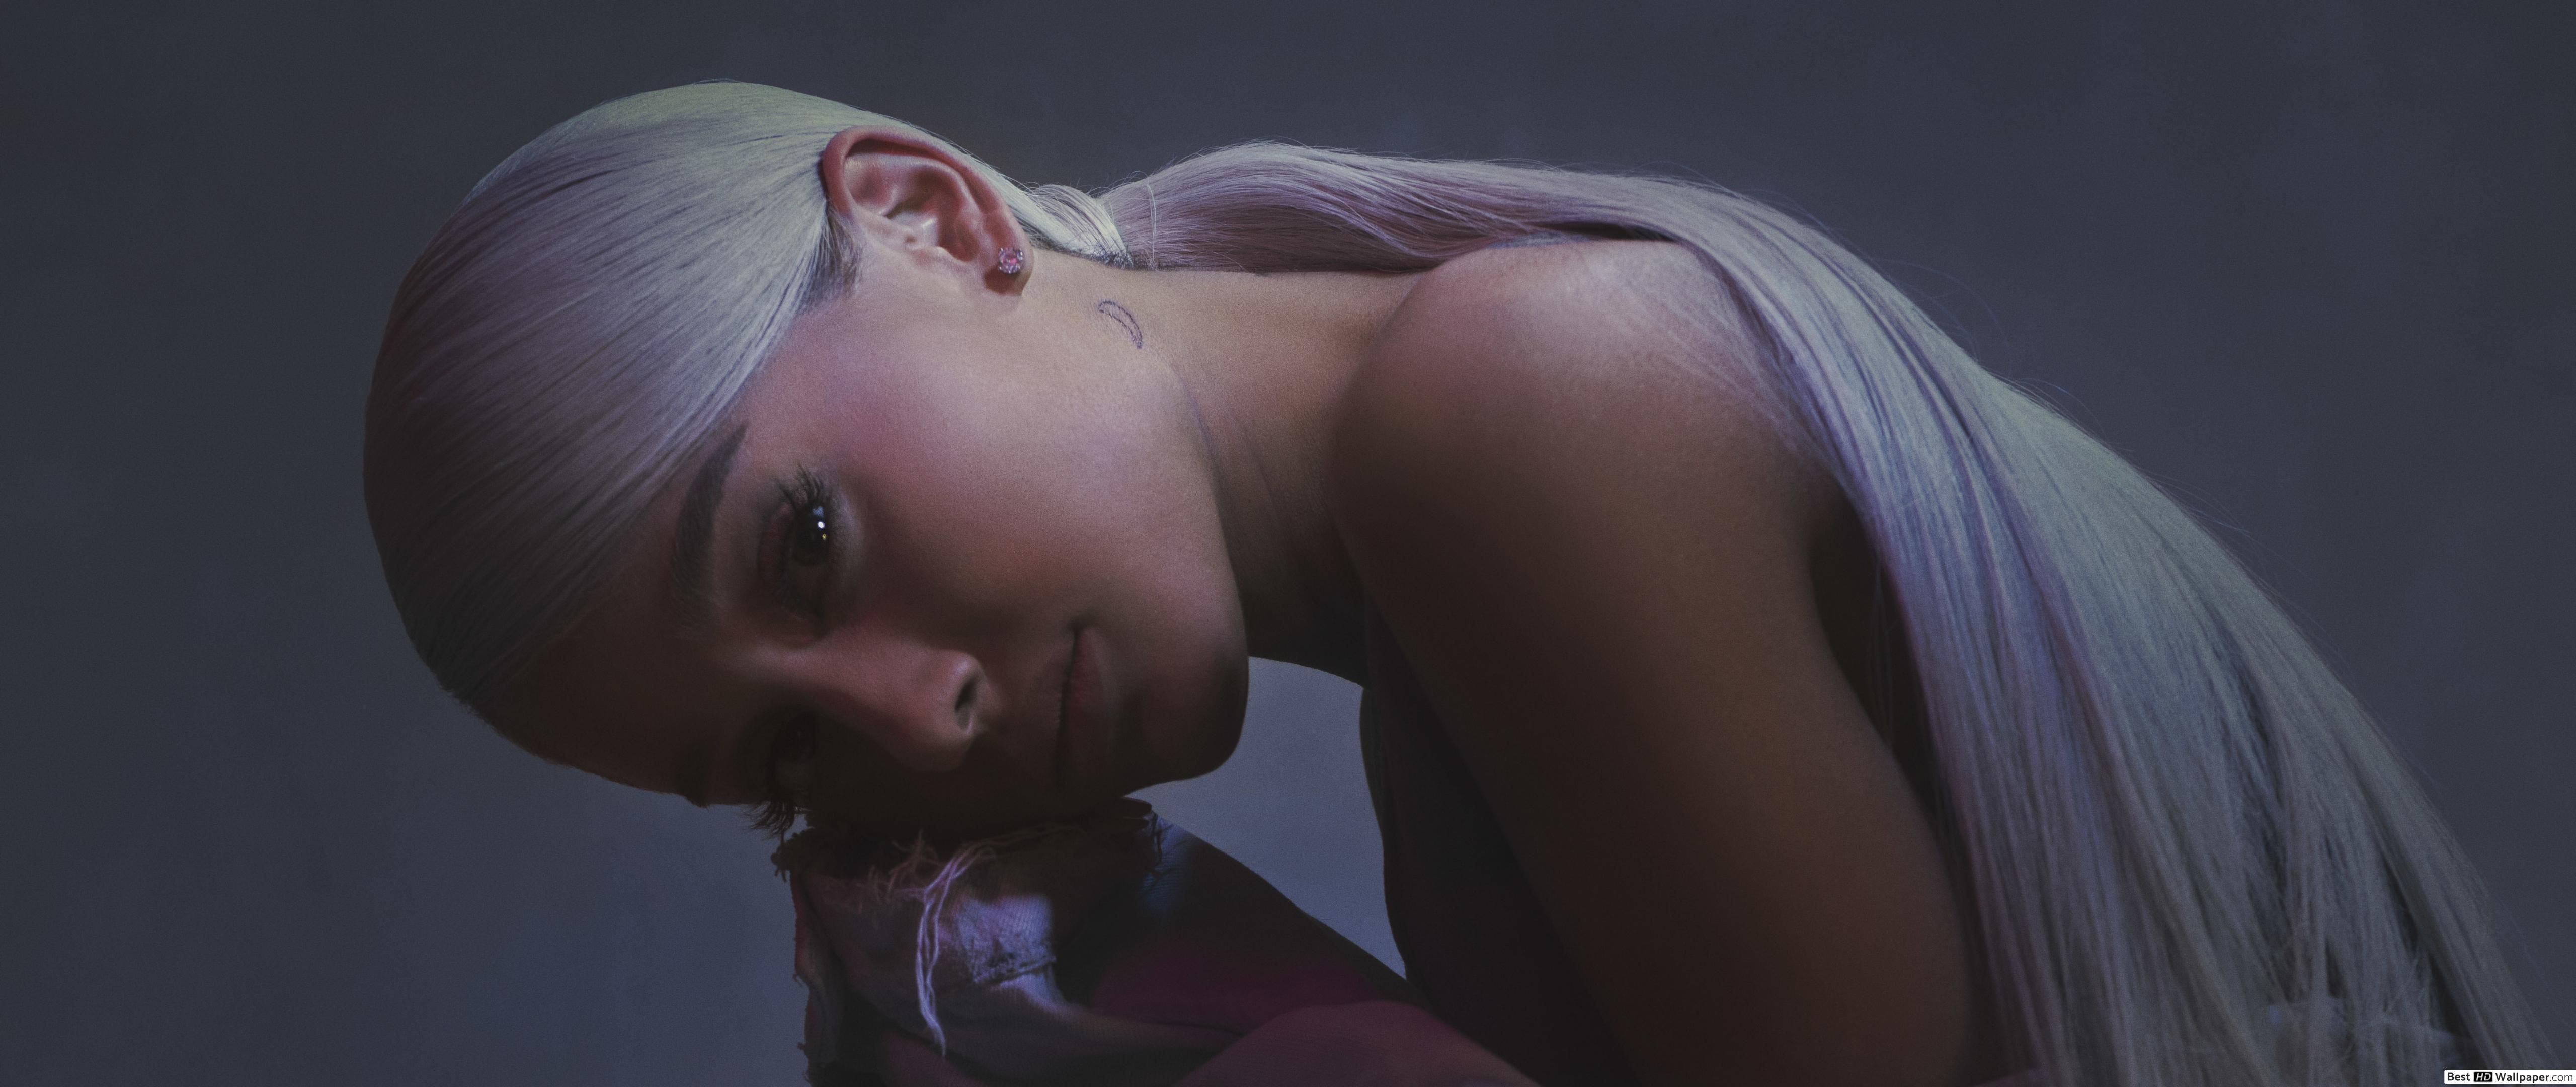 Ariana Grande long blonde ponytail HD wallpaper download